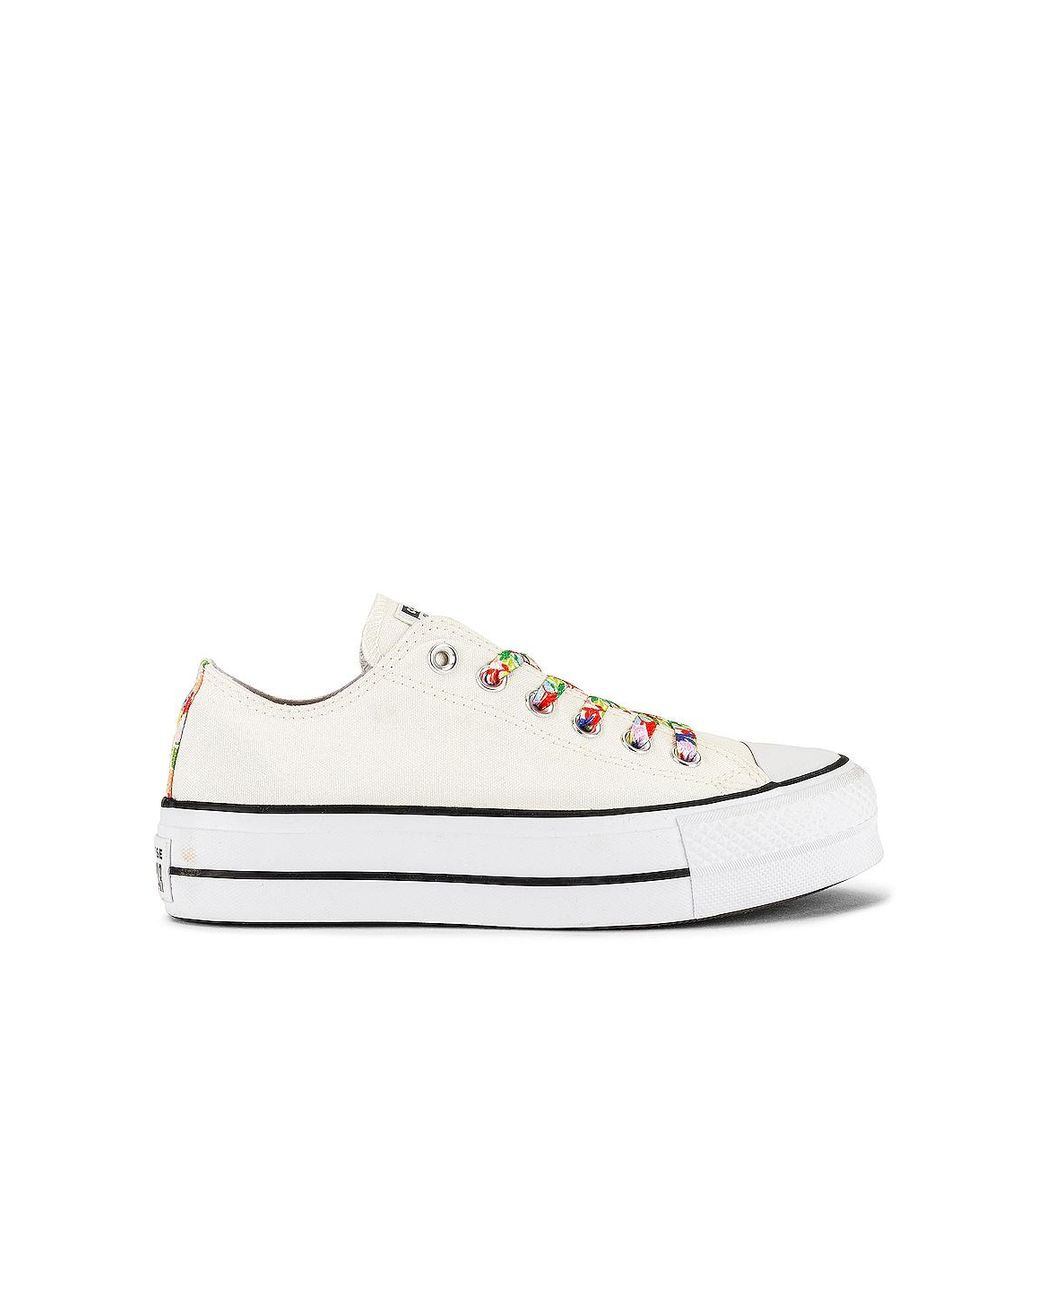 Converse Chuck Taylor All Star Garden Party Platform Sneaker in White ...